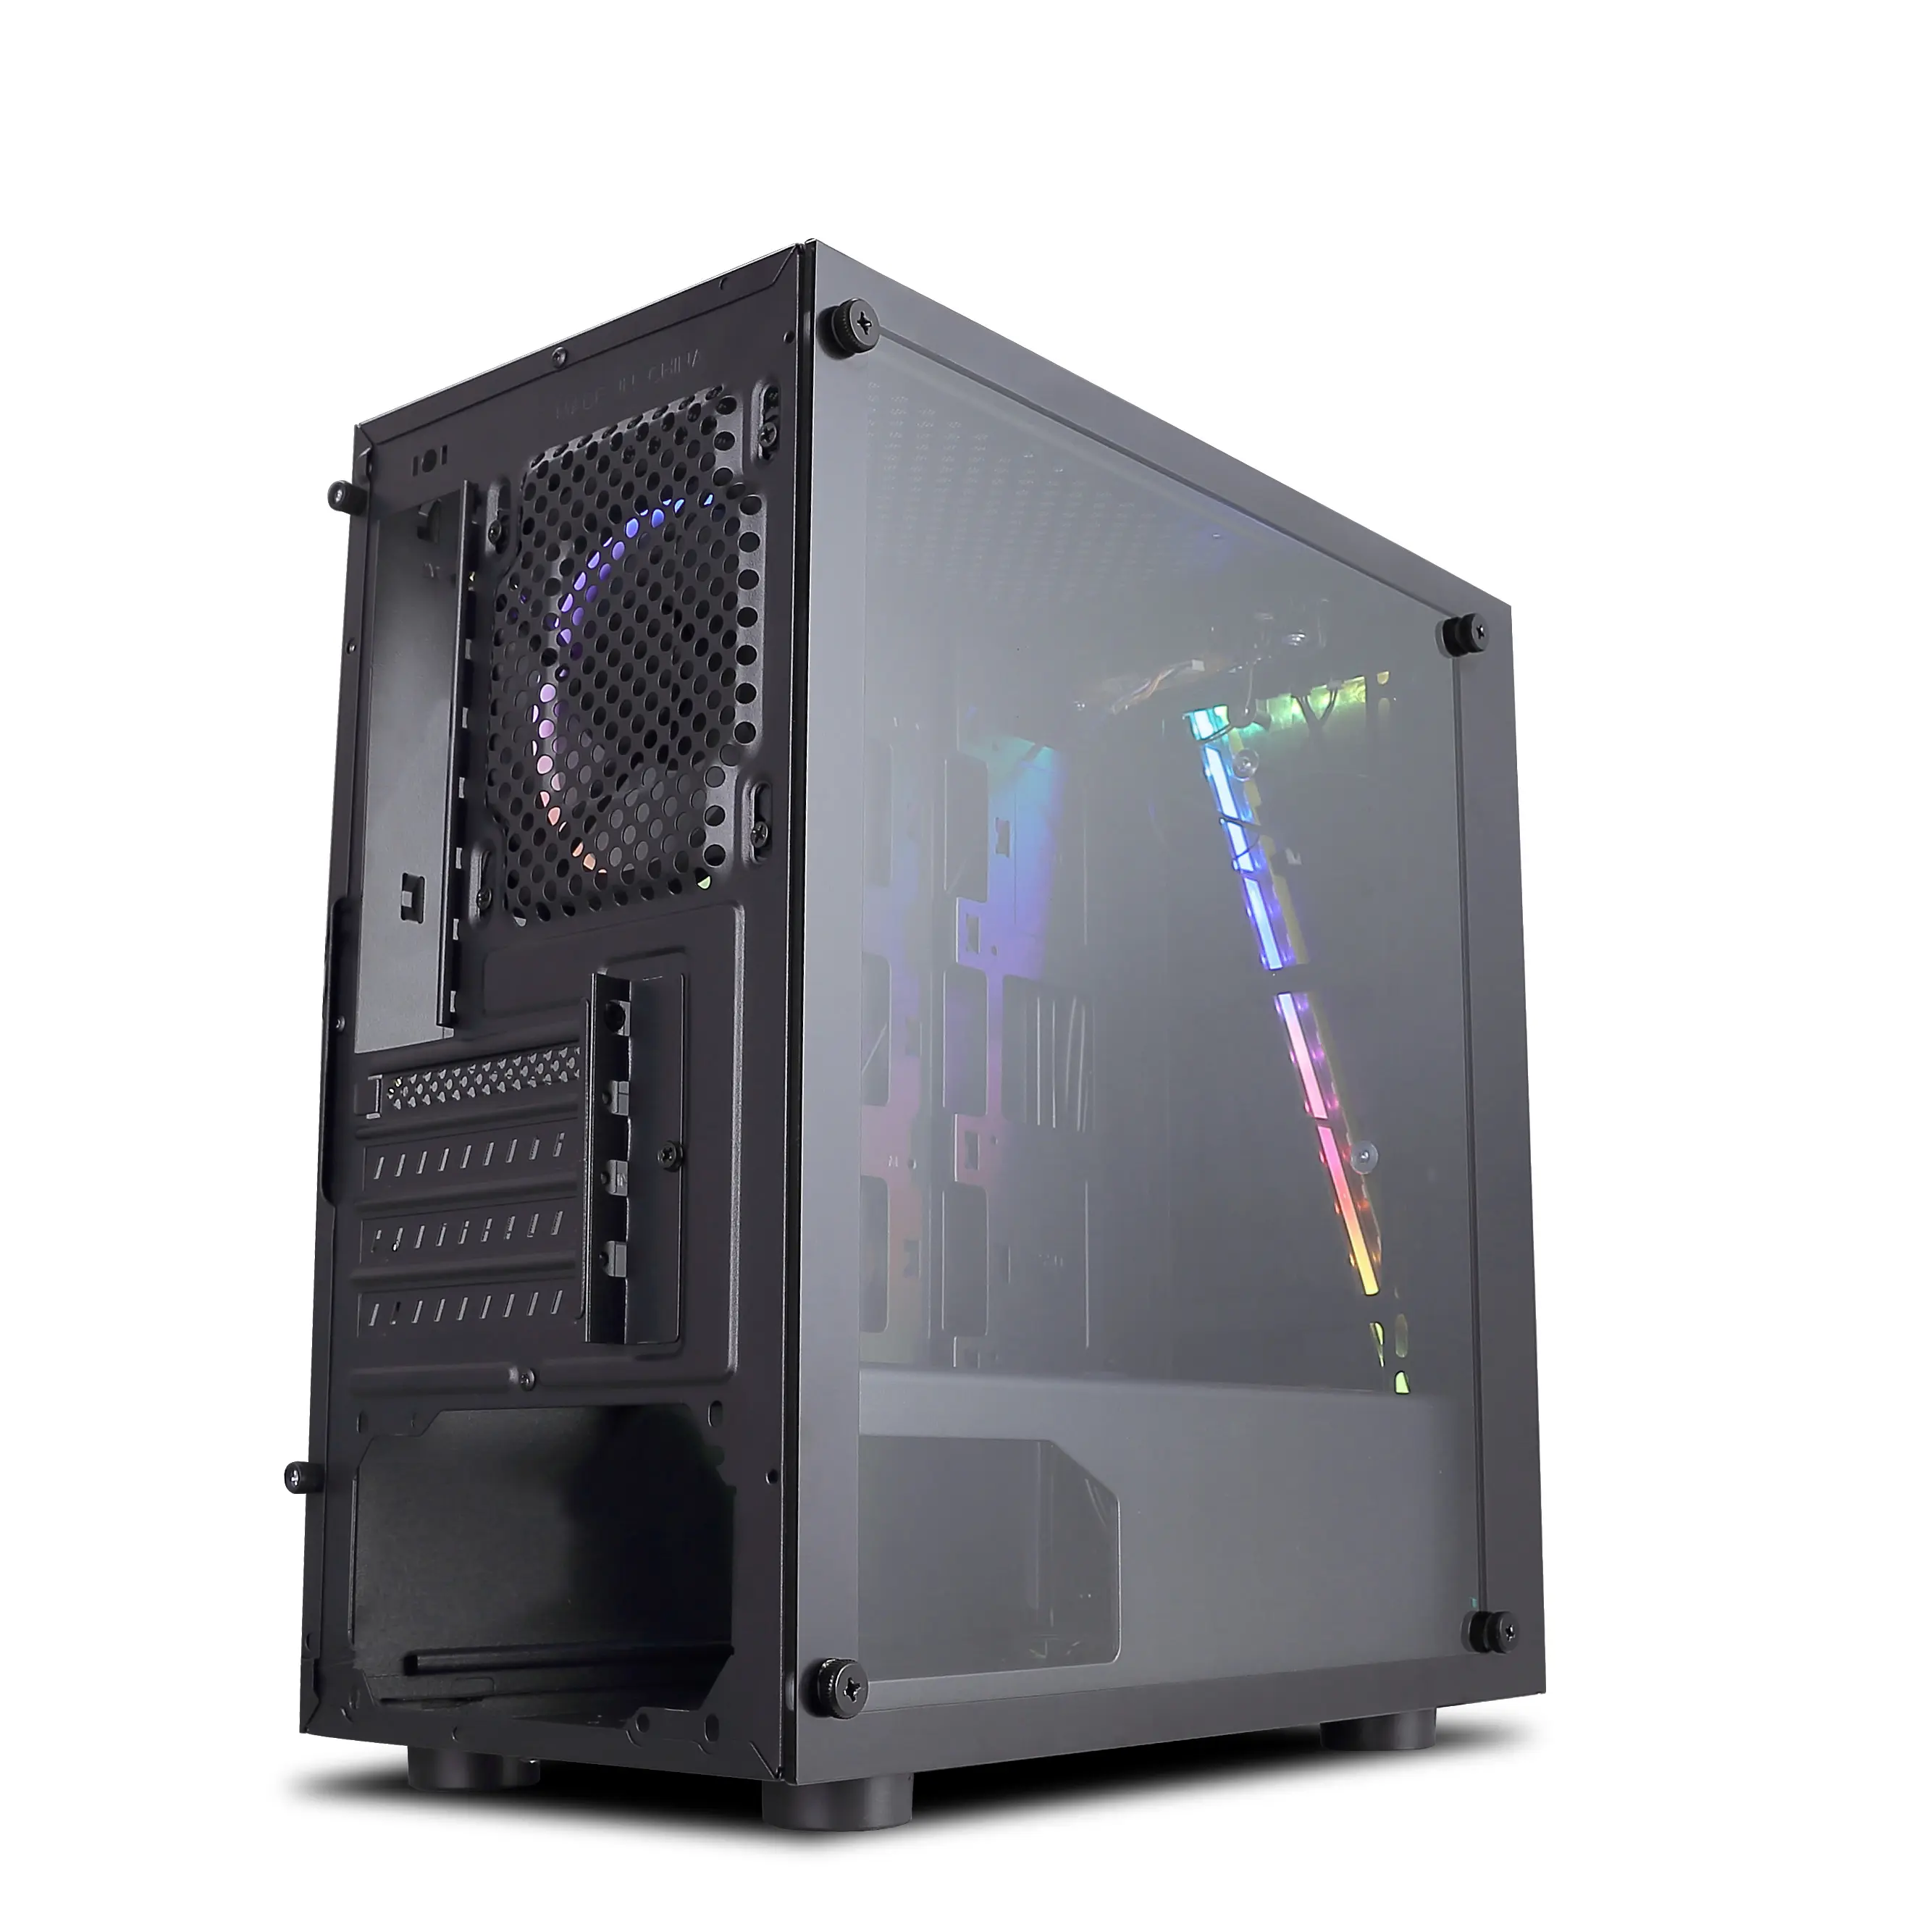 V SERISI V13 Mikro oyun kasası Cam Siyah Sınır Baskı Dahil İki RGB ışık şeridi bilgisayar kasası